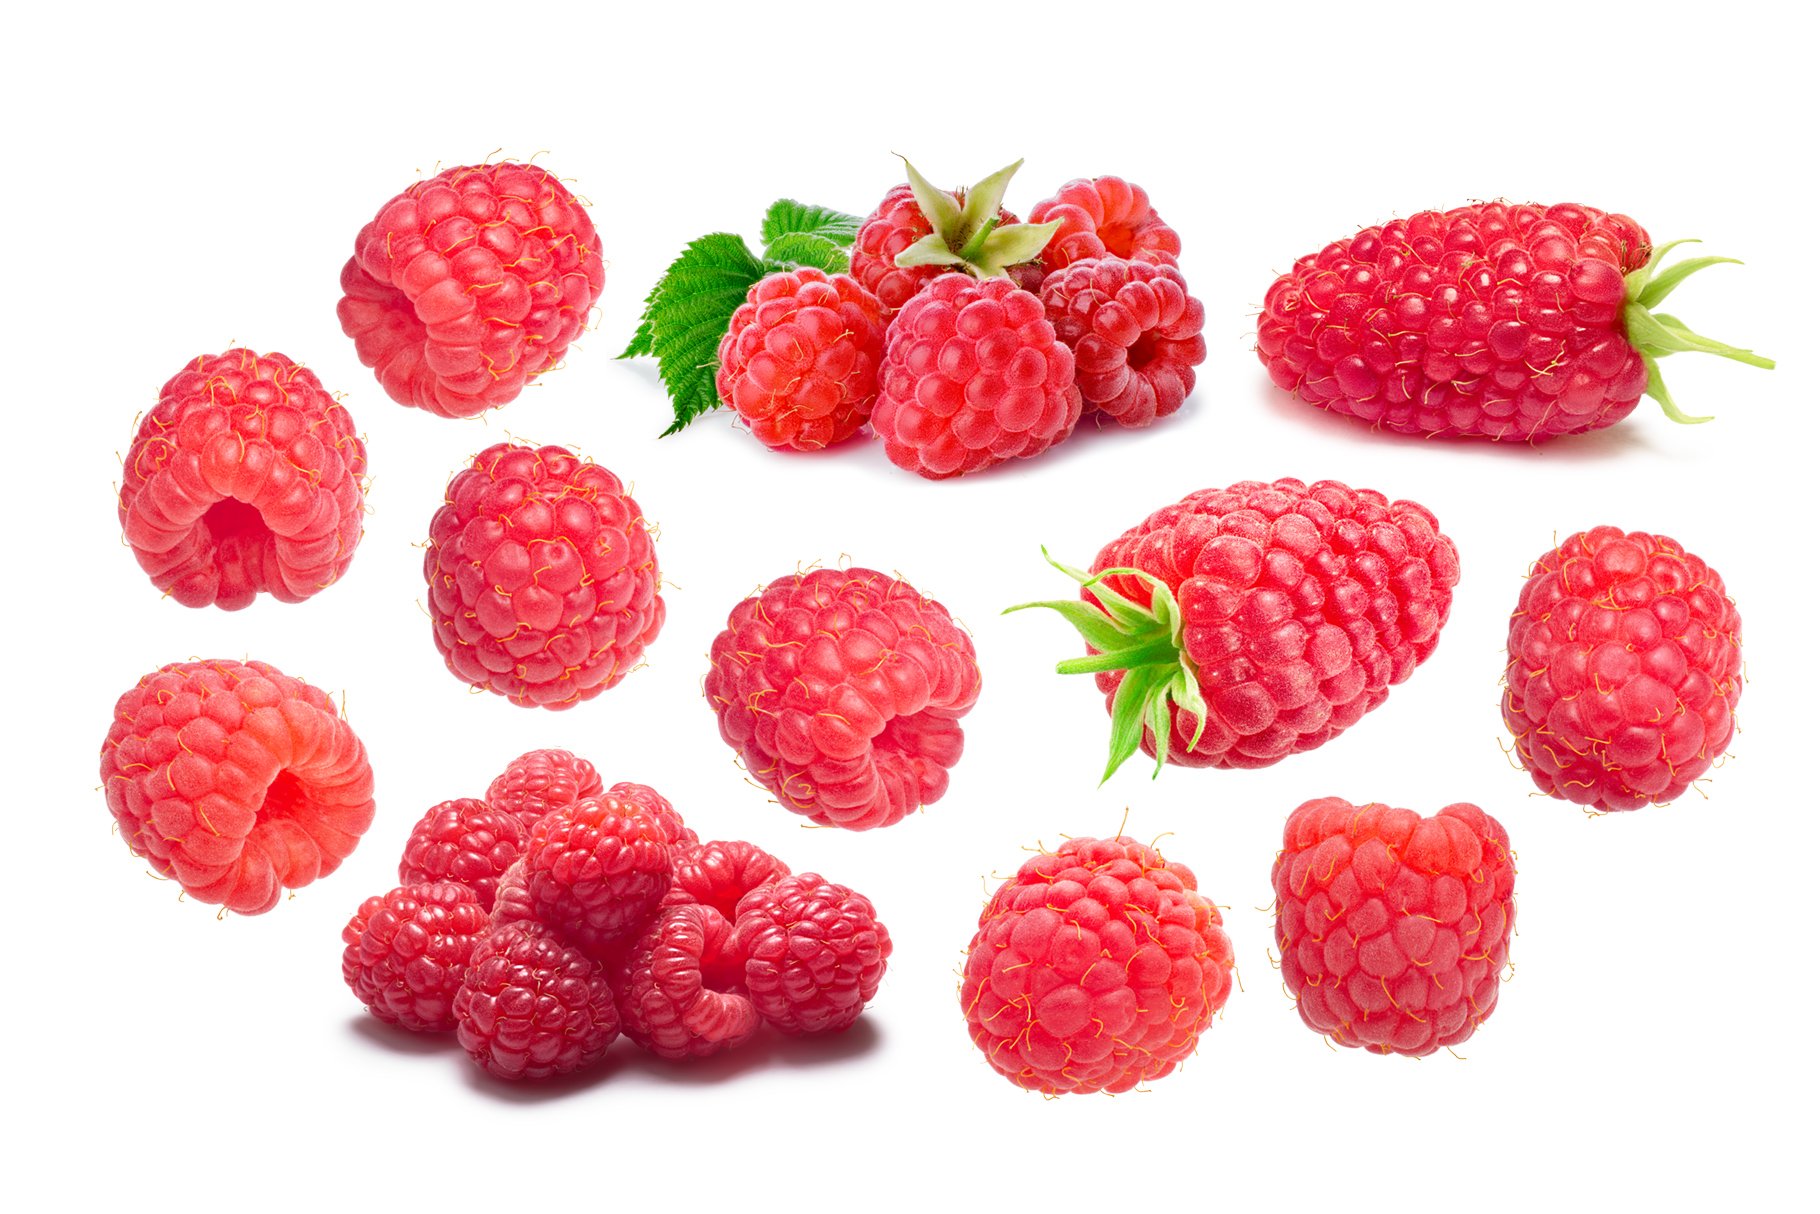 Raspberries cover image.